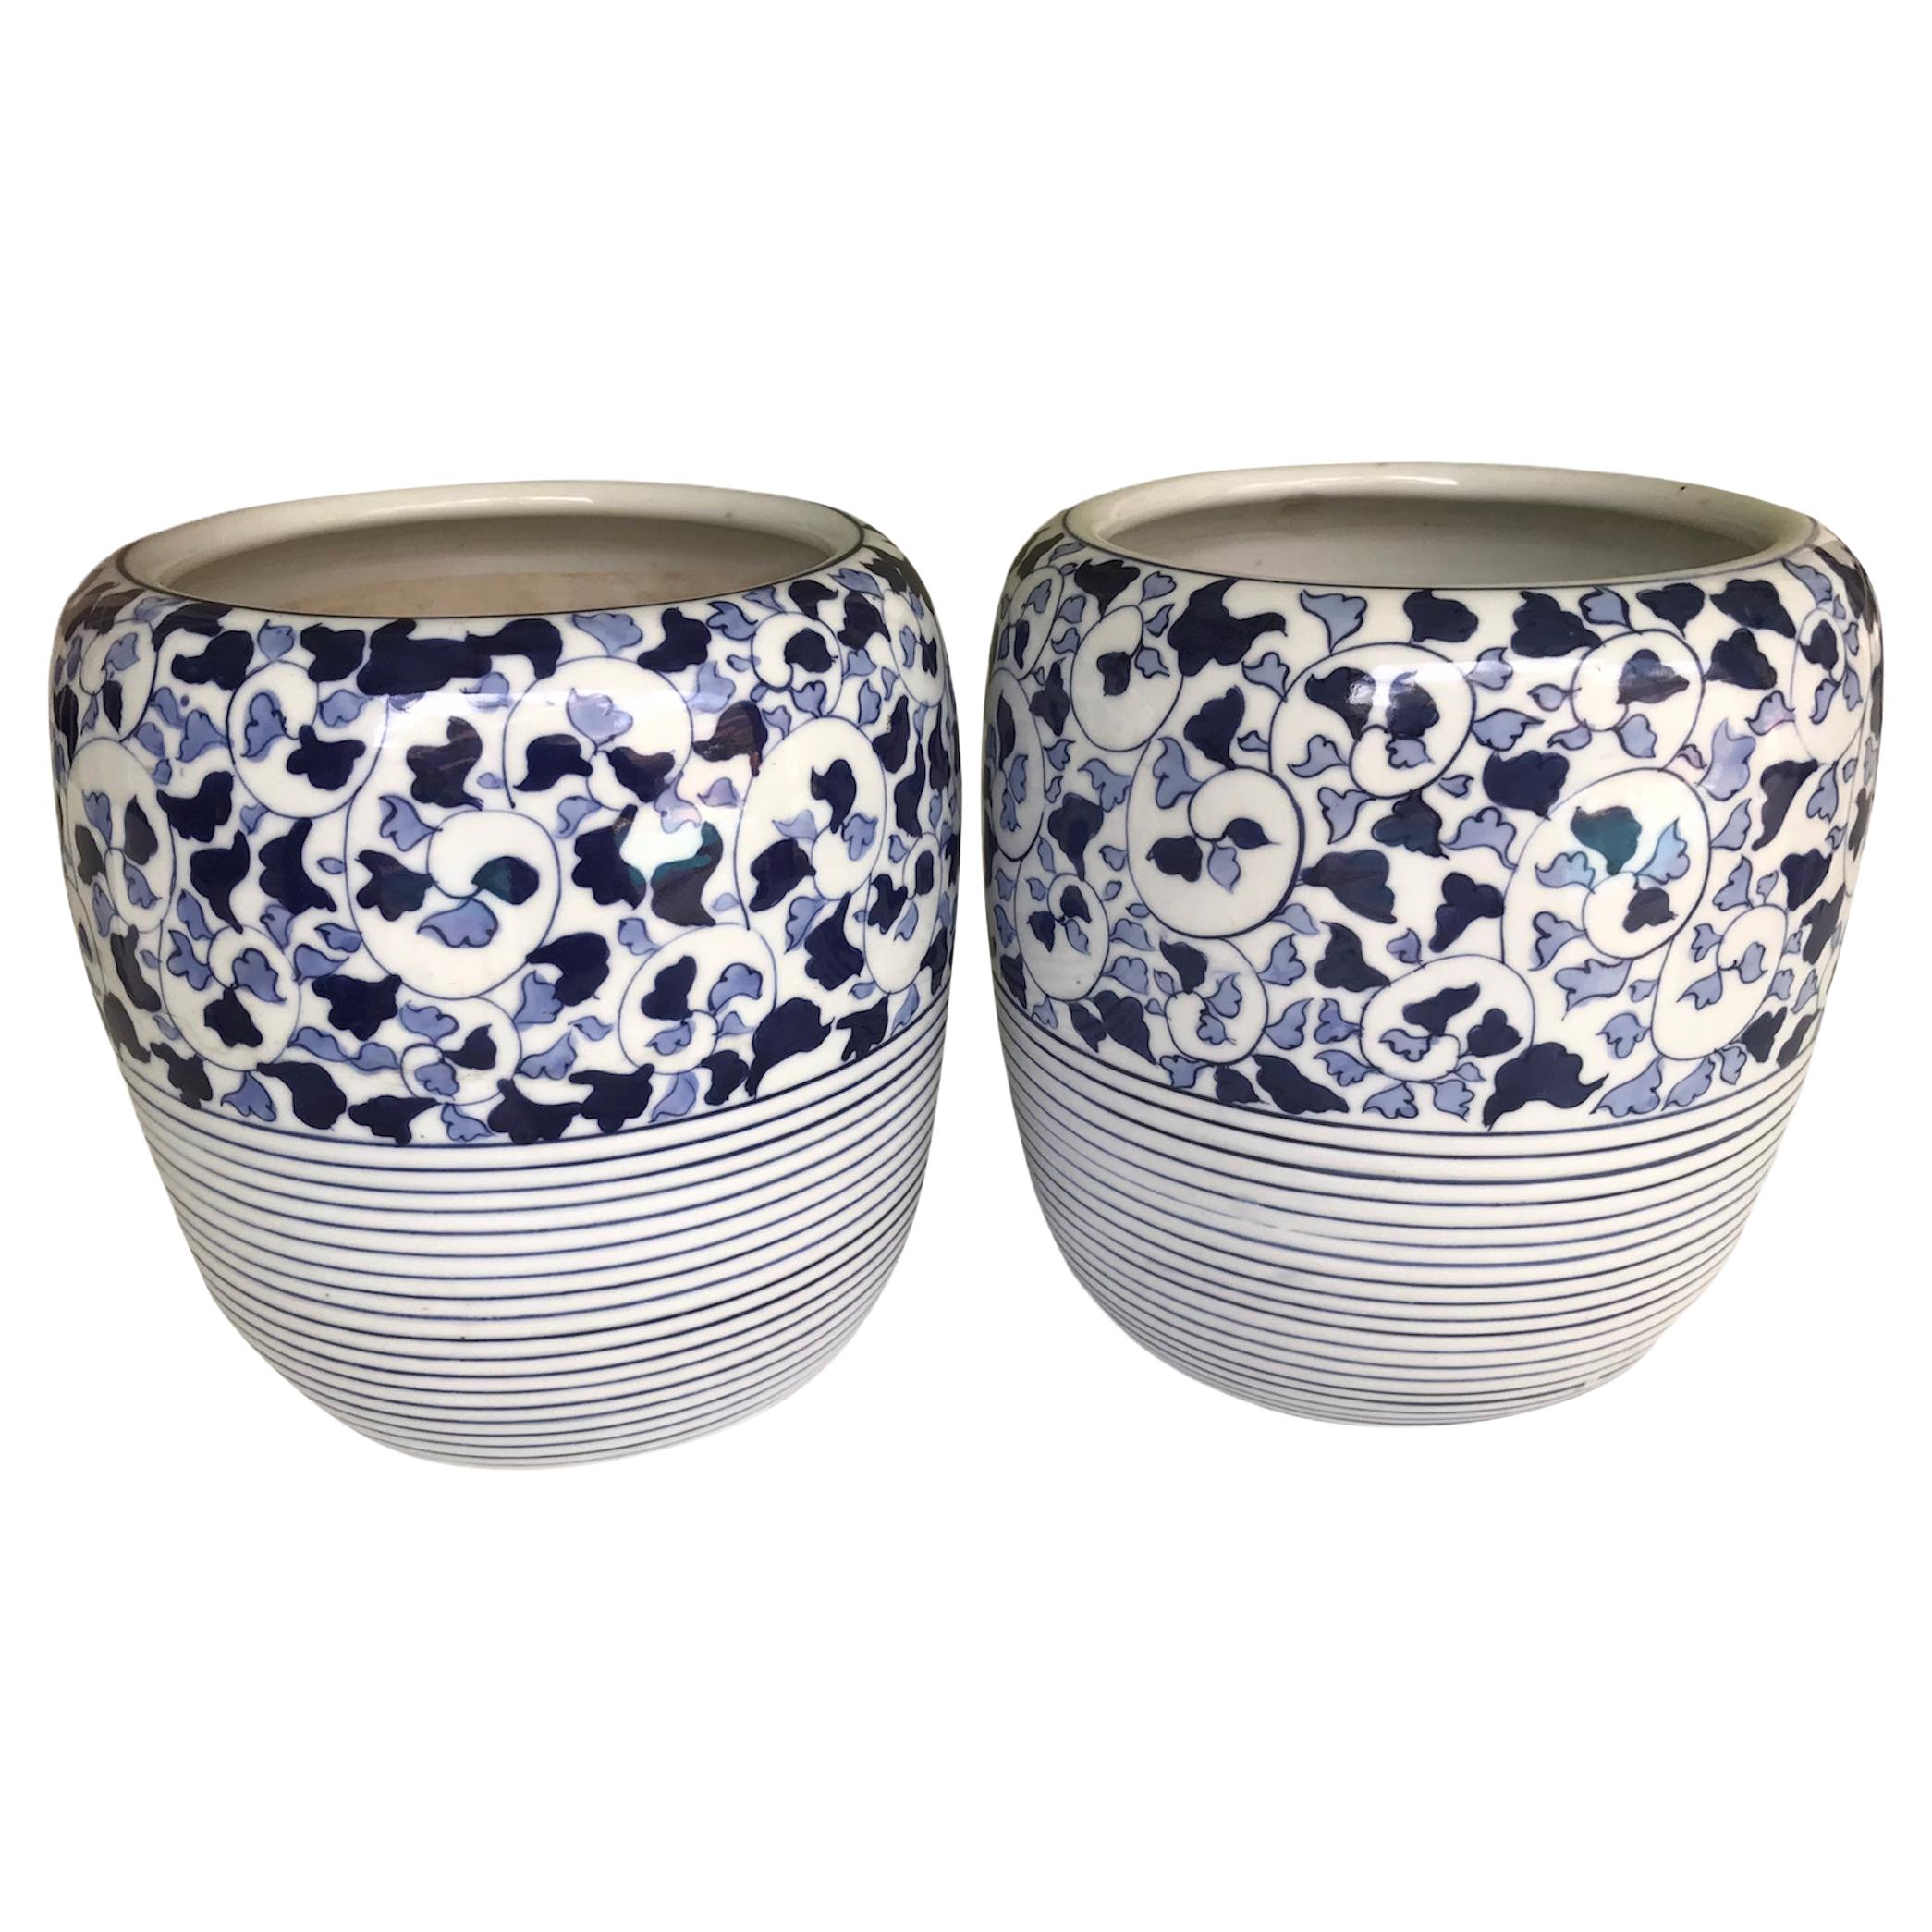 1960s Asian Modern Pair of Blue & White Ceramic Hibachis Floral Motif, Japan